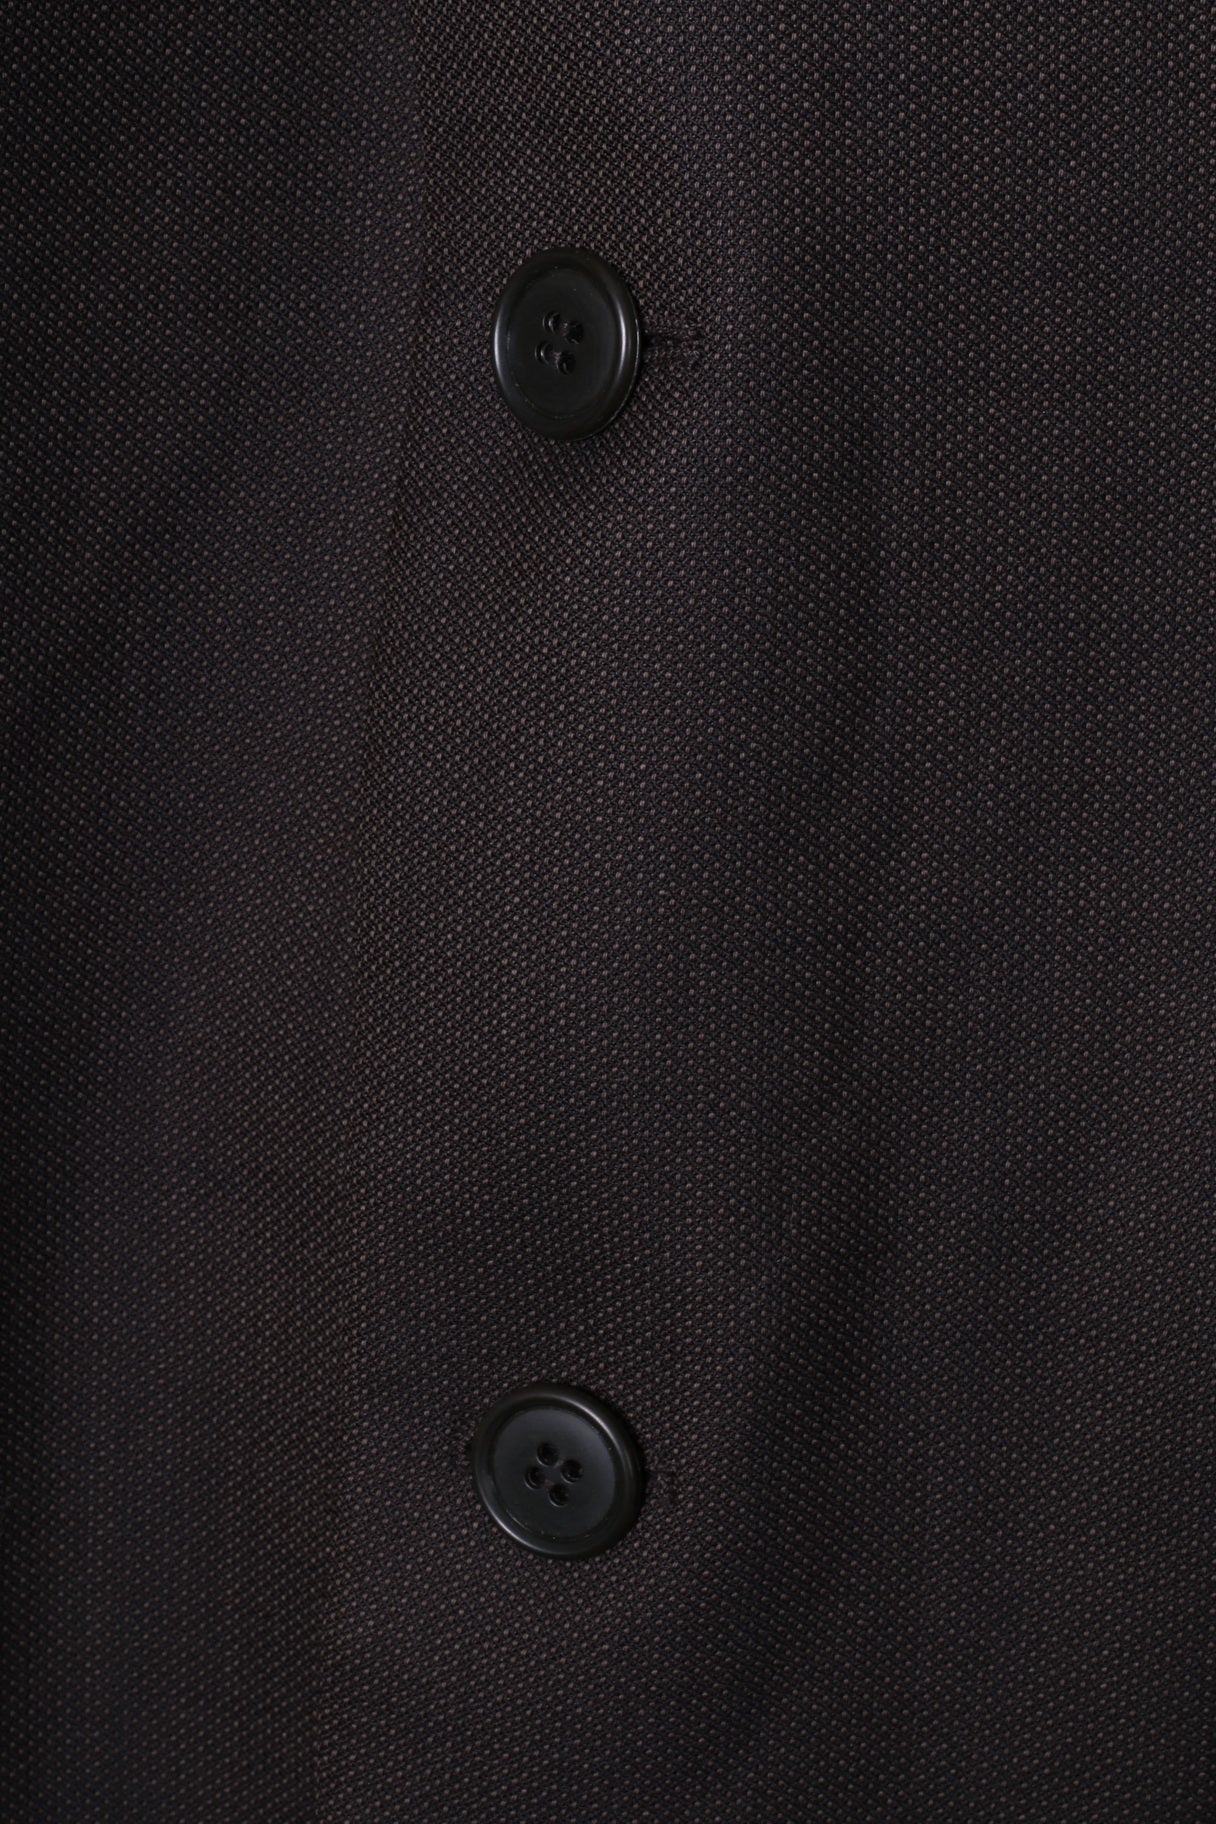 Ben Sherman Men 40 102cm Blazer Brown 100% Wool Single Breasted Classic Jacket